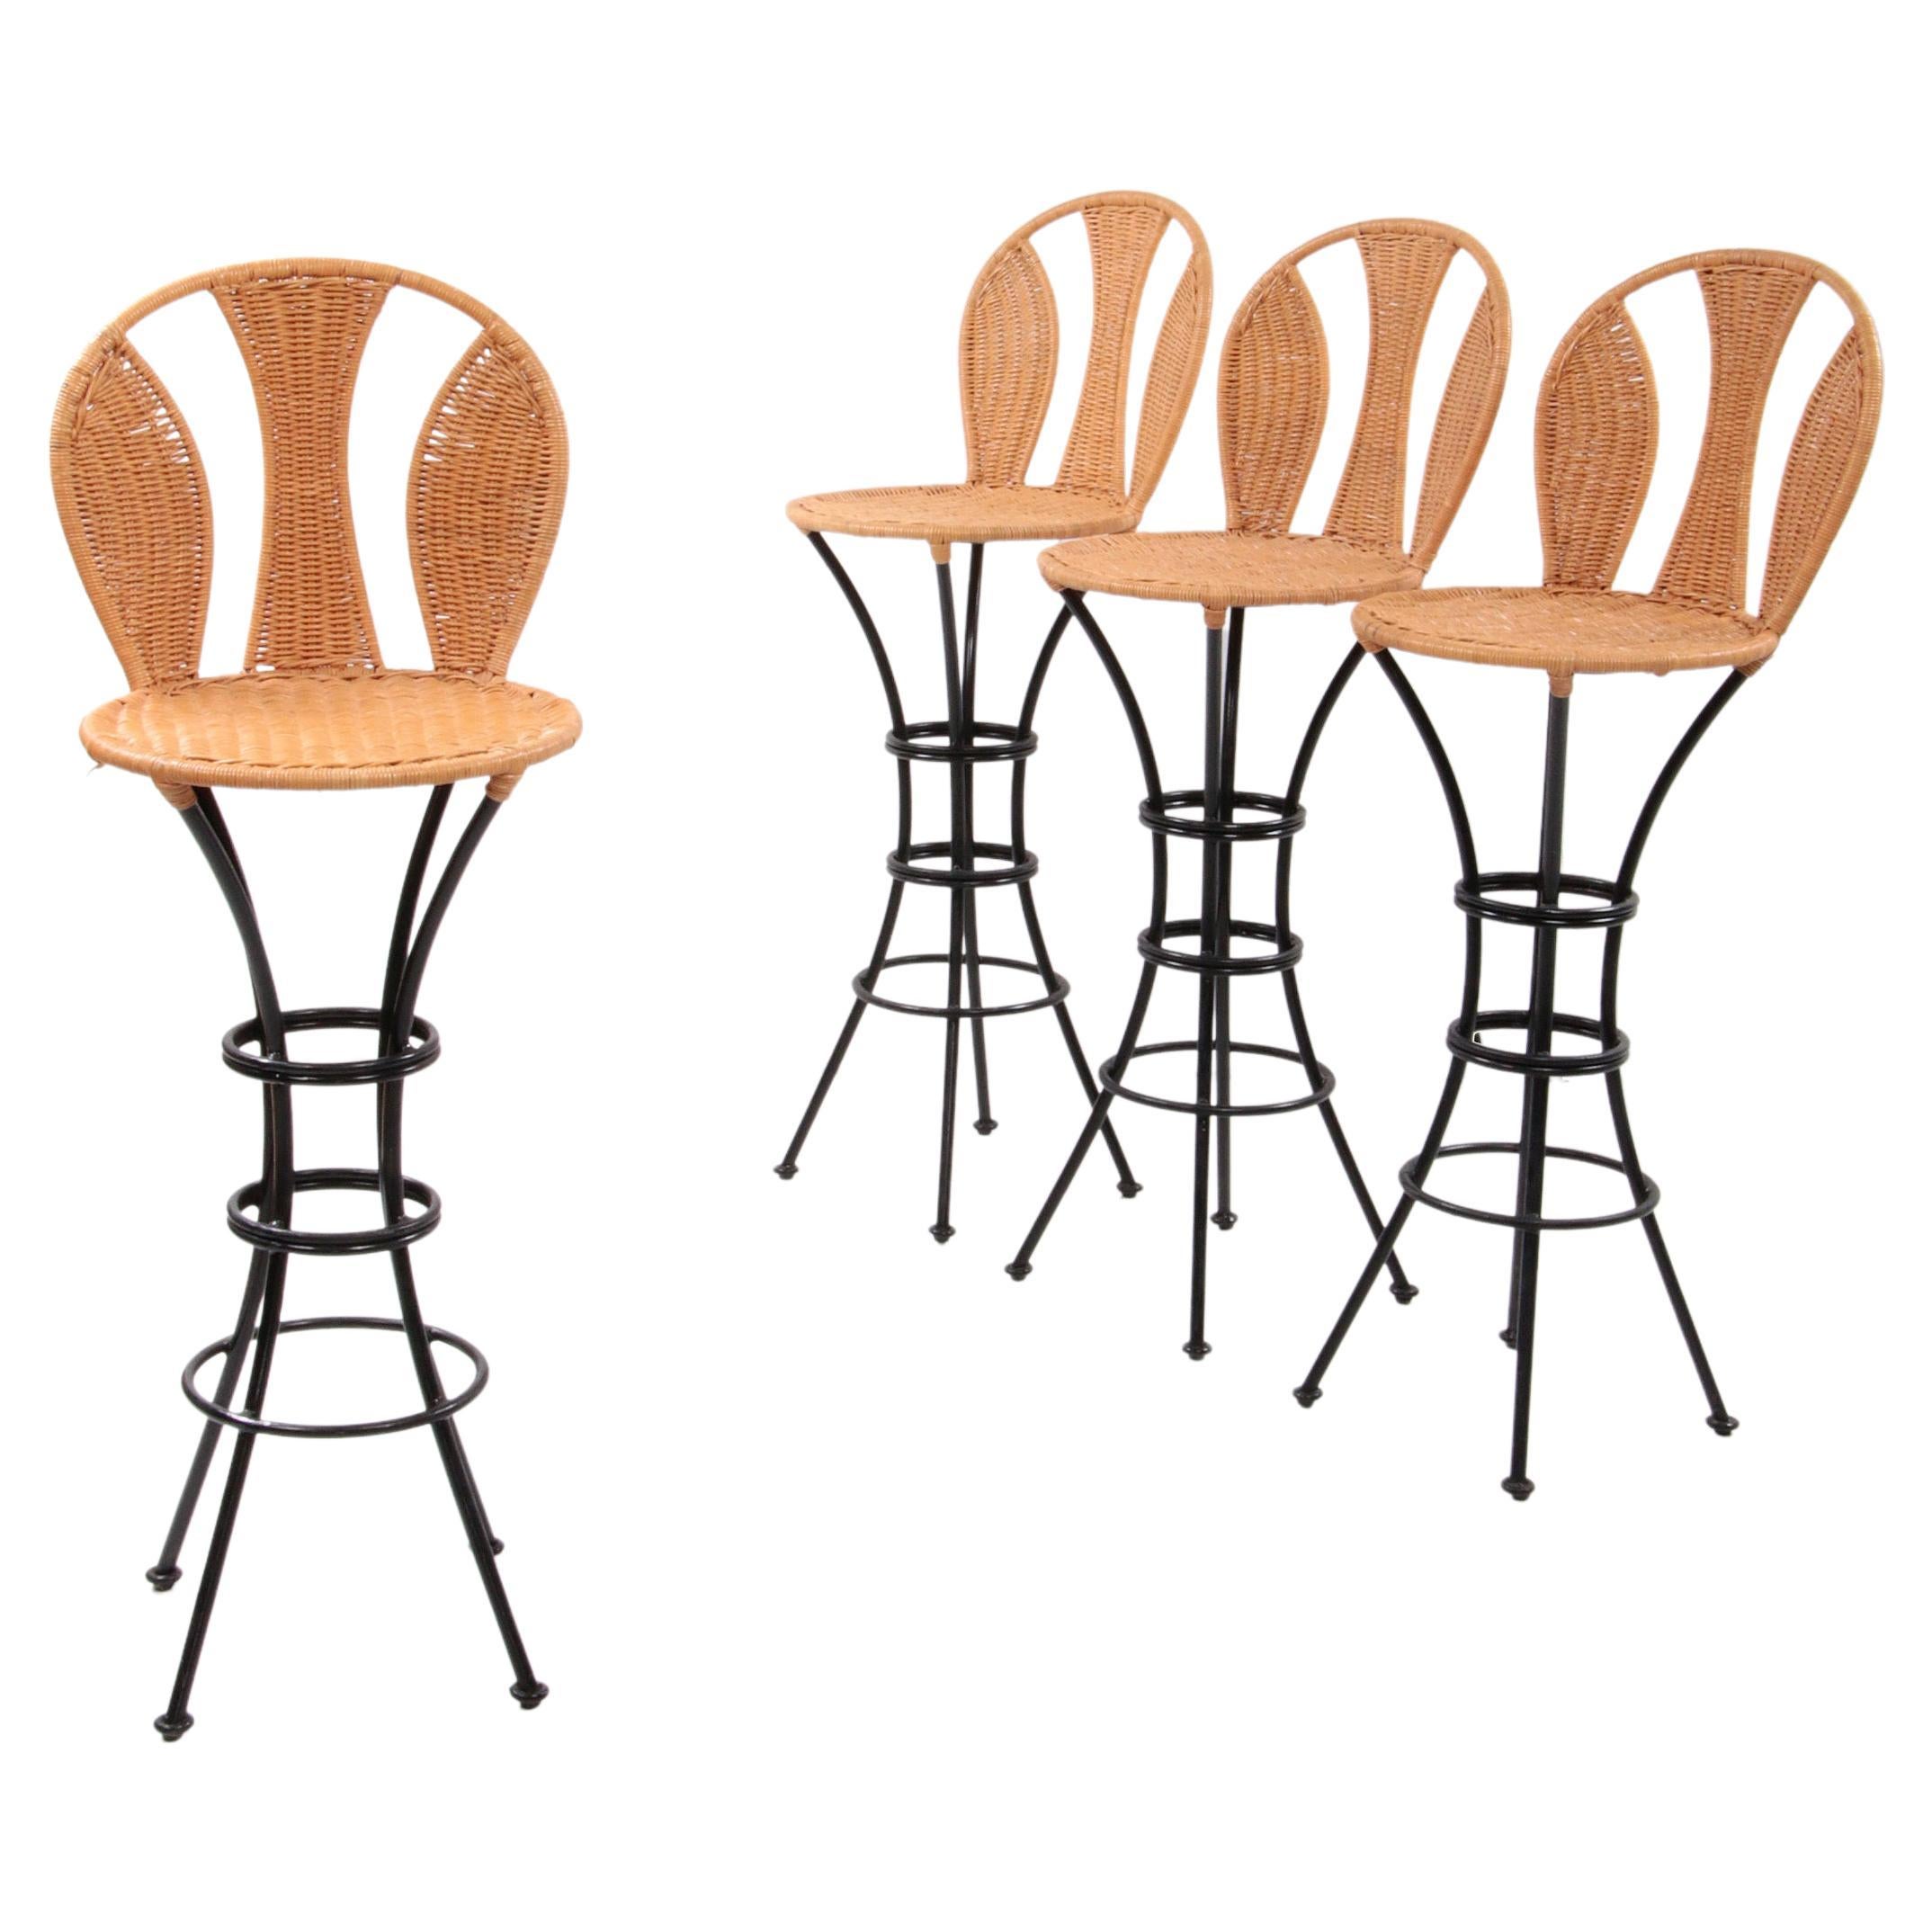 Set of 4 Italian bar stools from the 1970s.